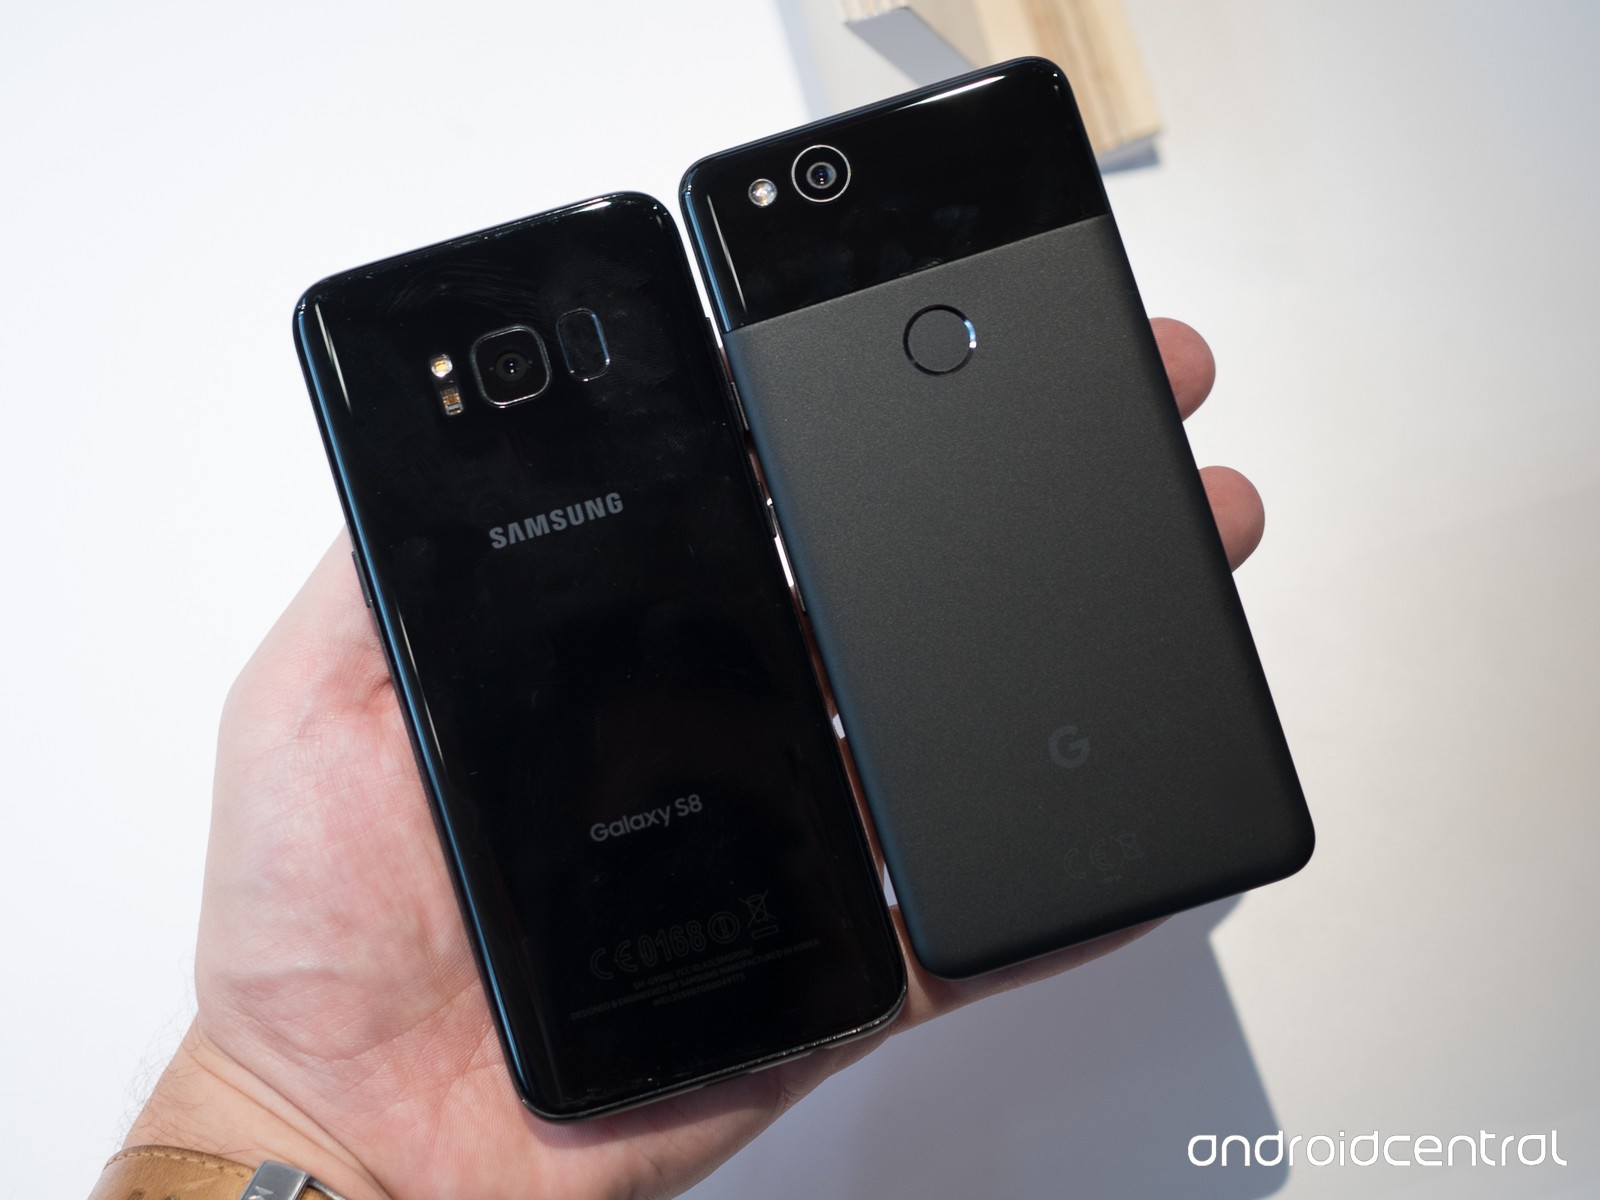 The Google Pixel 2 vs Galaxy S8